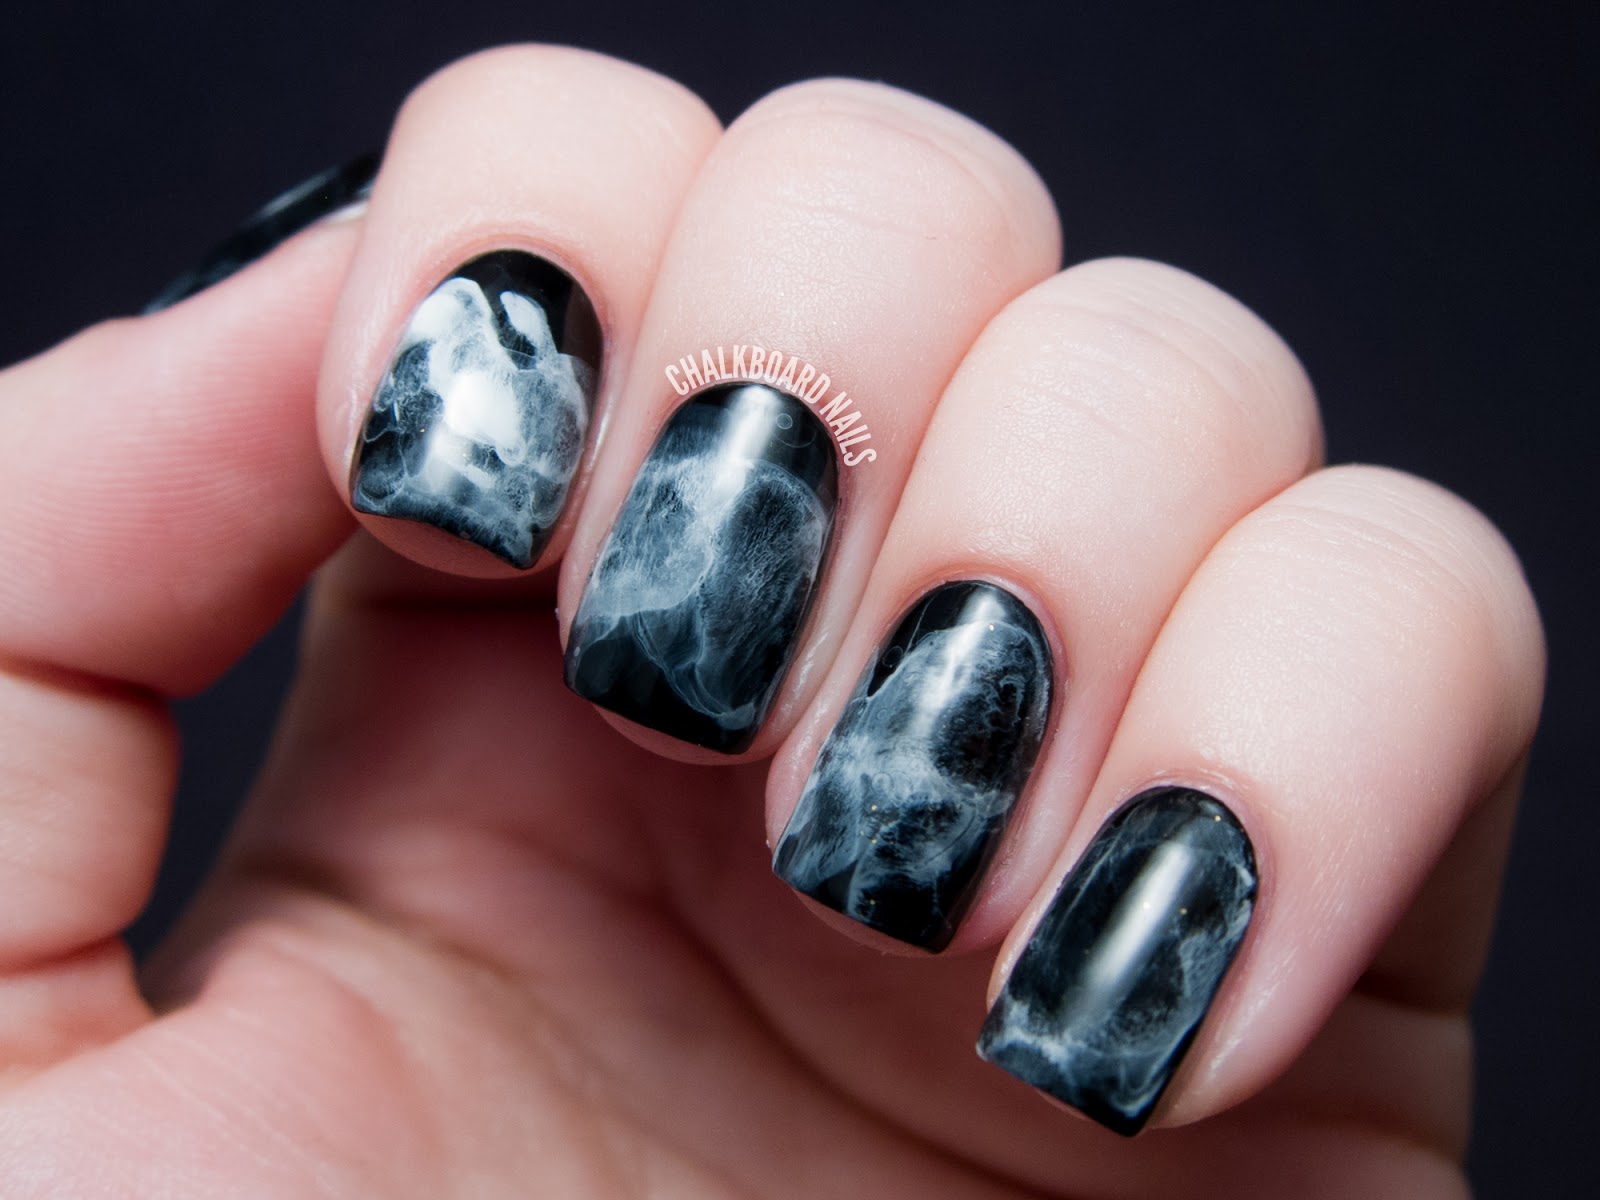 nail art on black